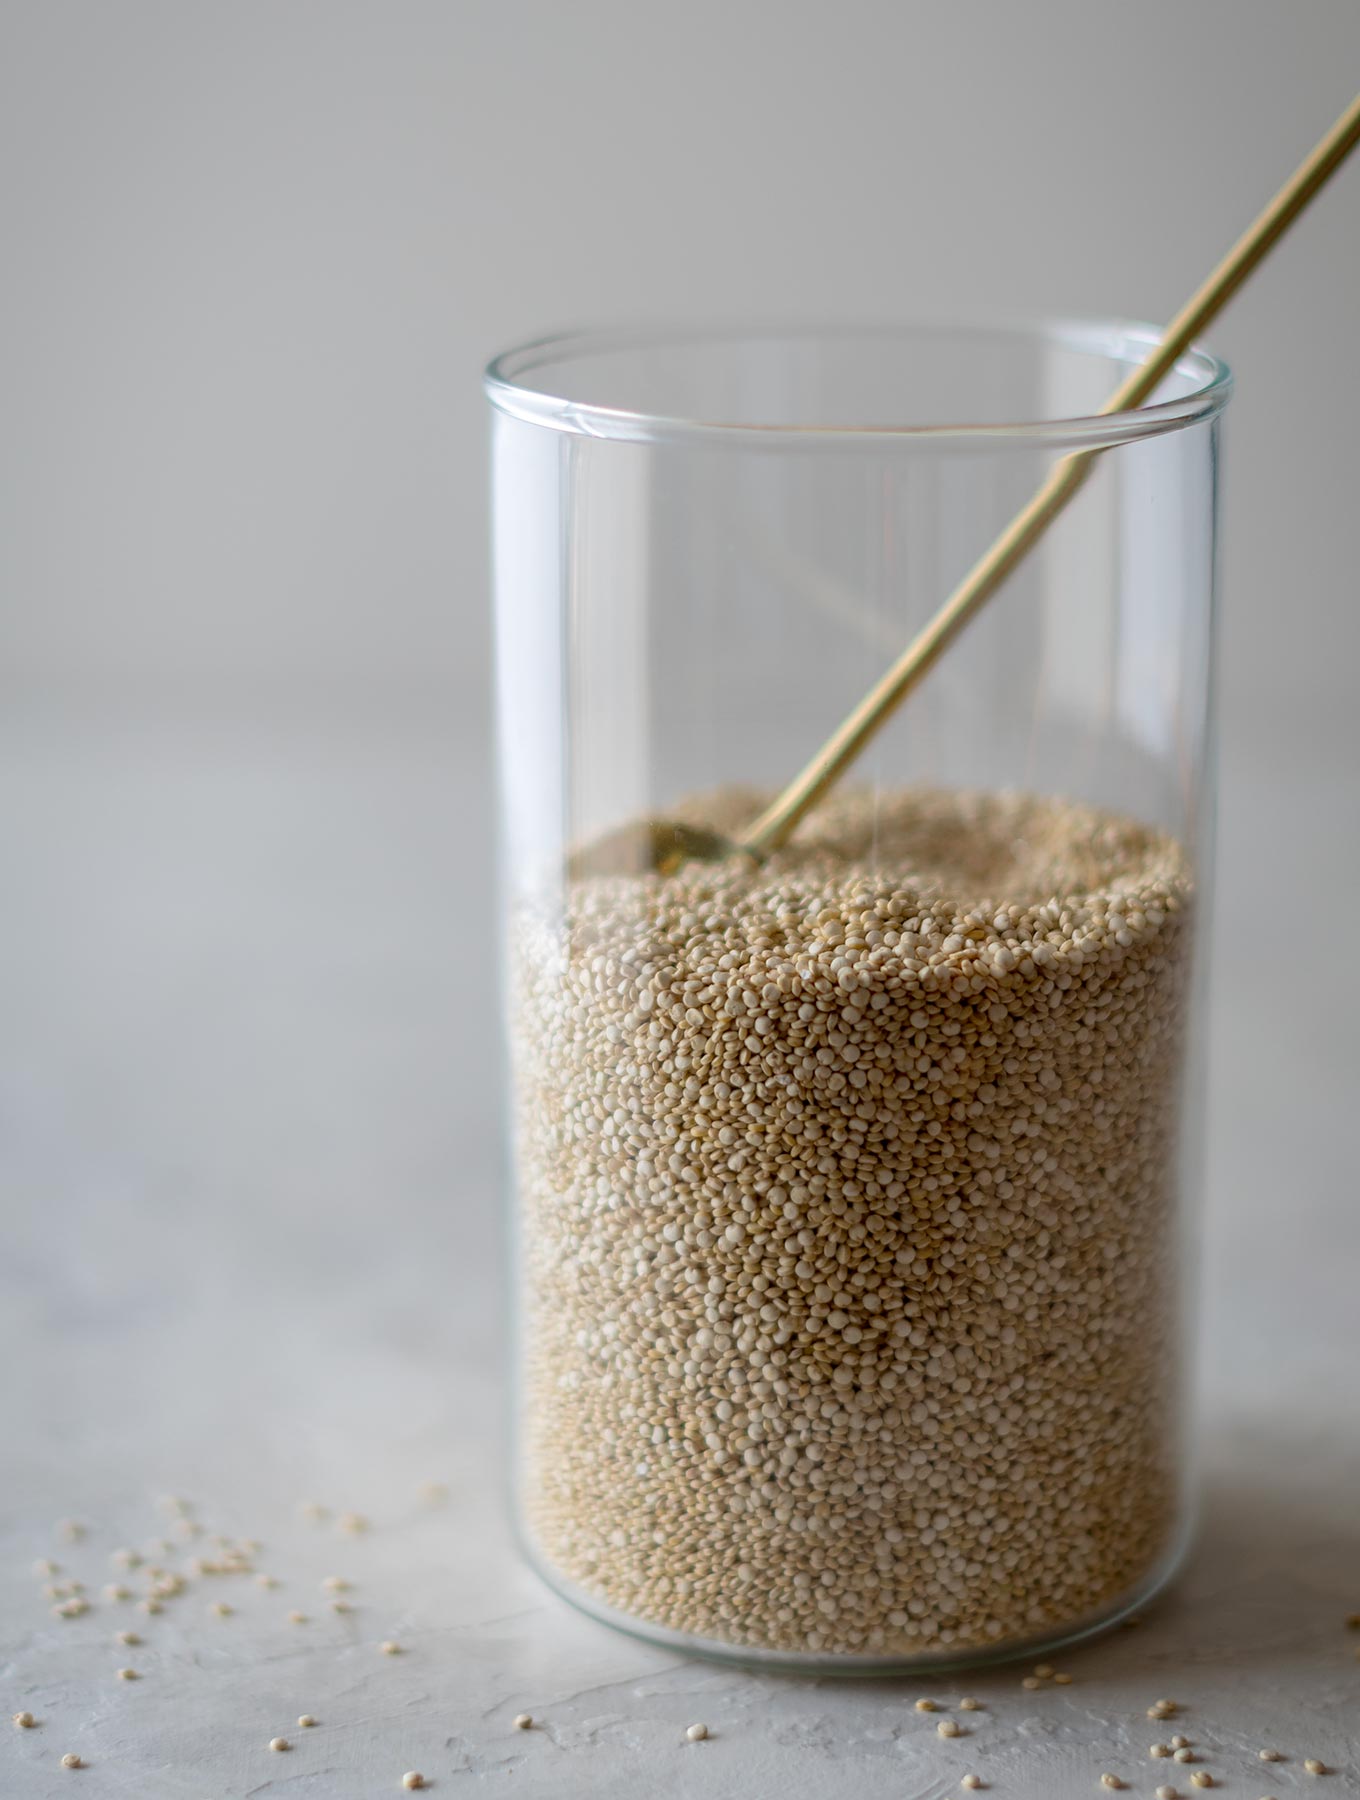 Jar of quinoa